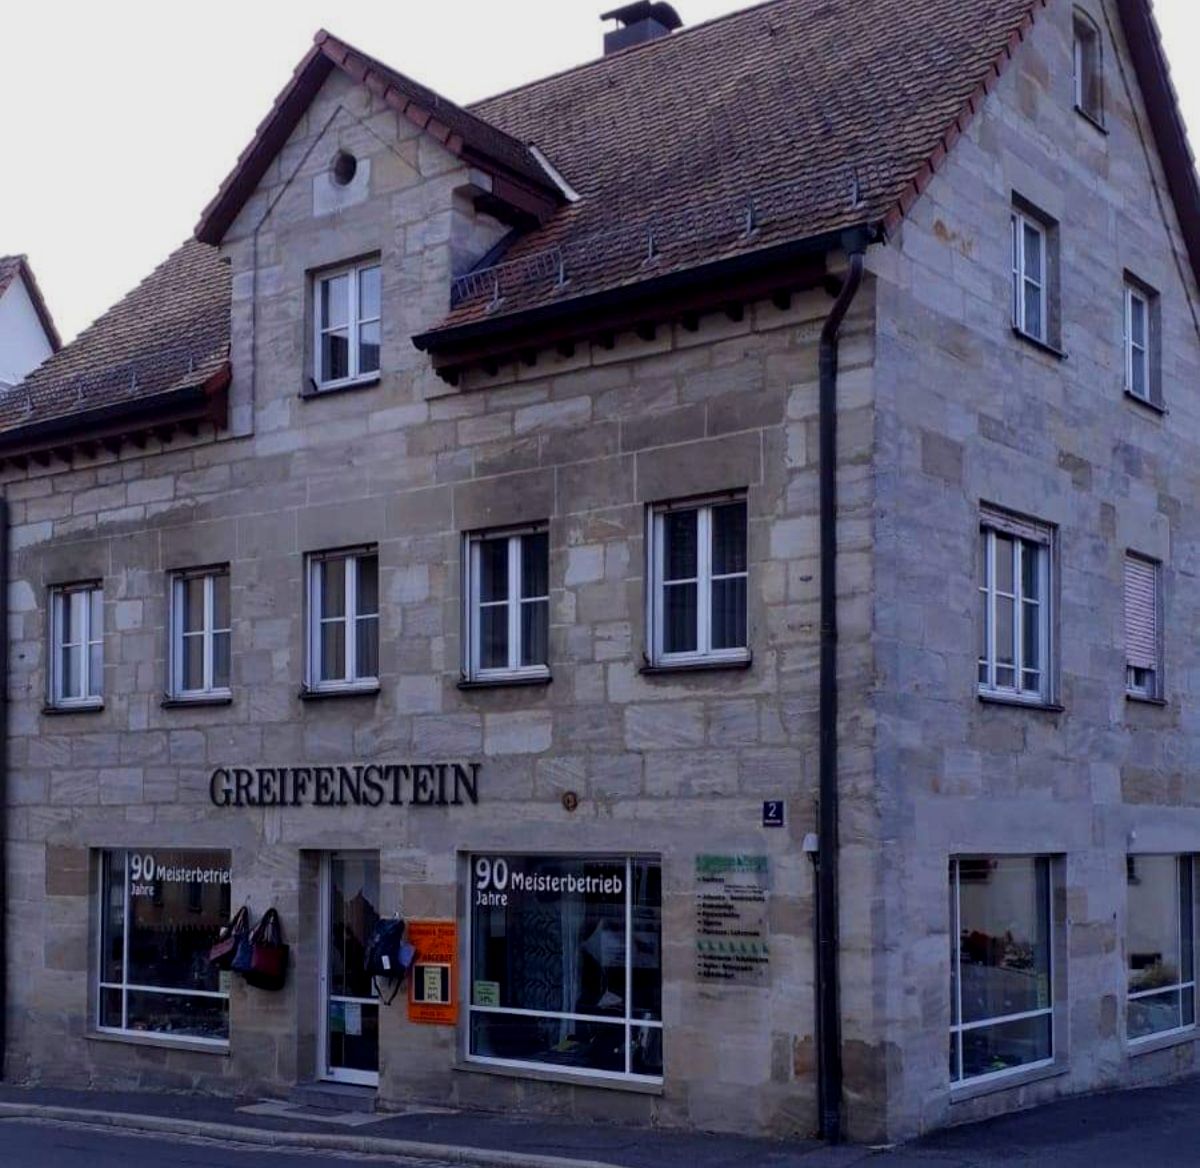 Greifenstein/Pfisterer